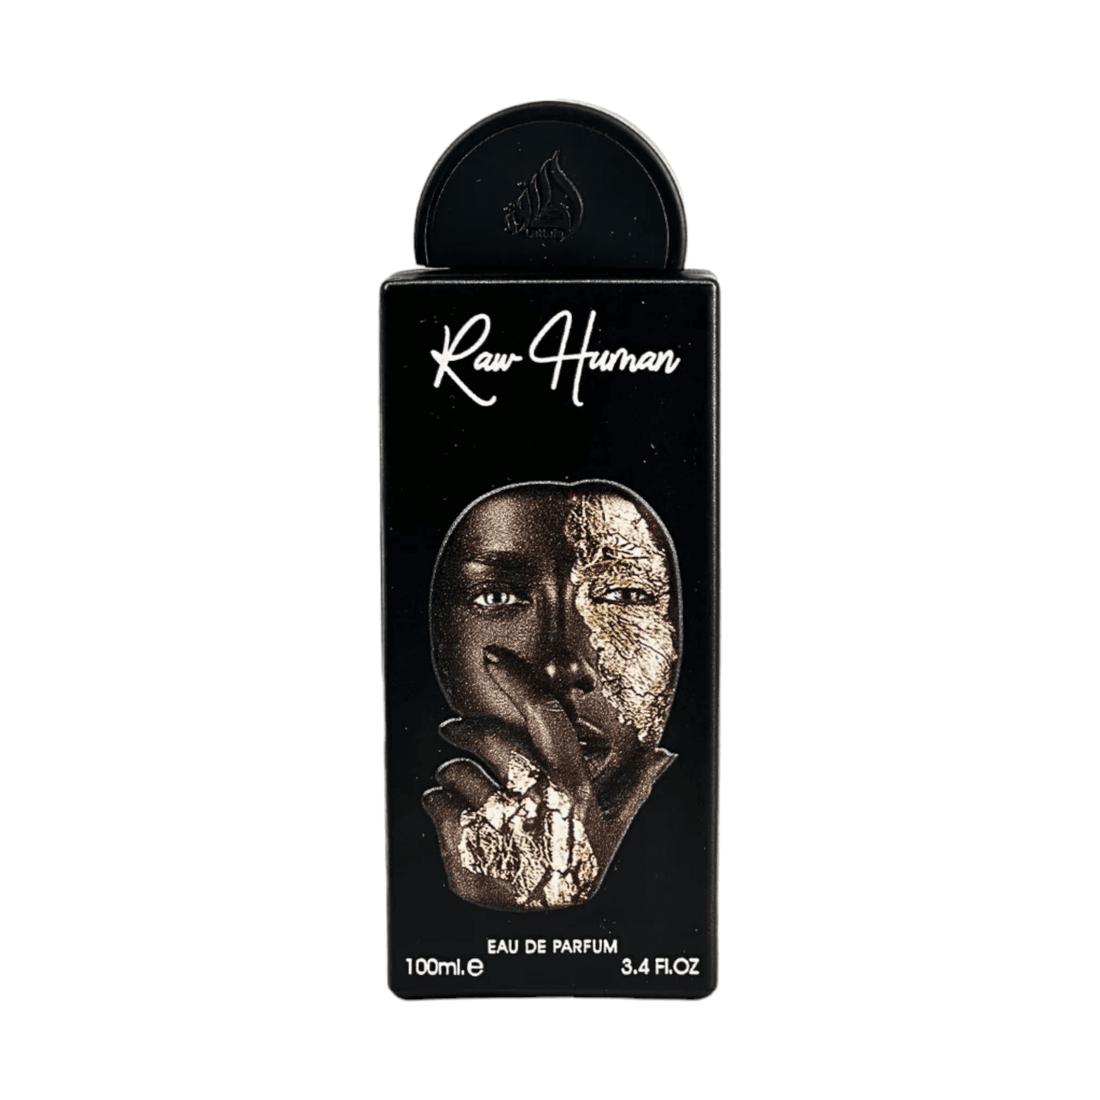 Sleek 100ml bottle of Raw Human Eau de Parfum by Lattafa Pride, embodying the fragrance's bold and sensual character.